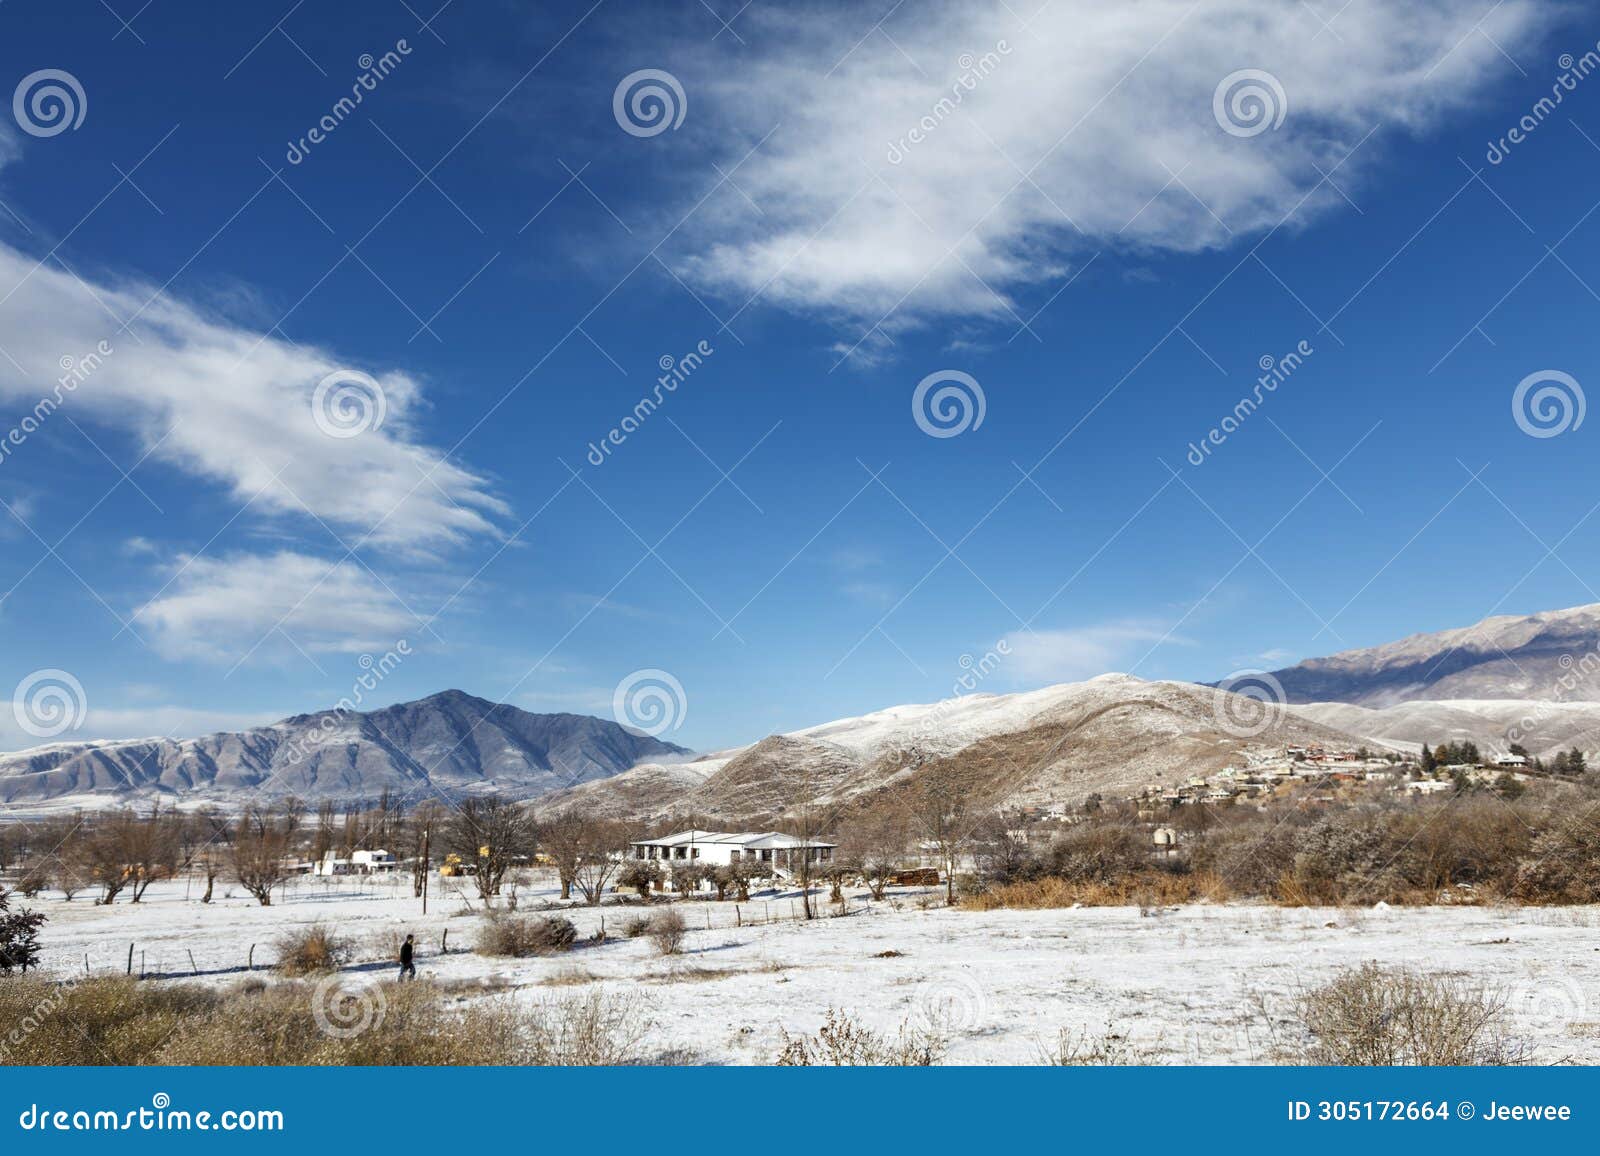 snow mountain landscape in tafi del valle, tucuman, argentina